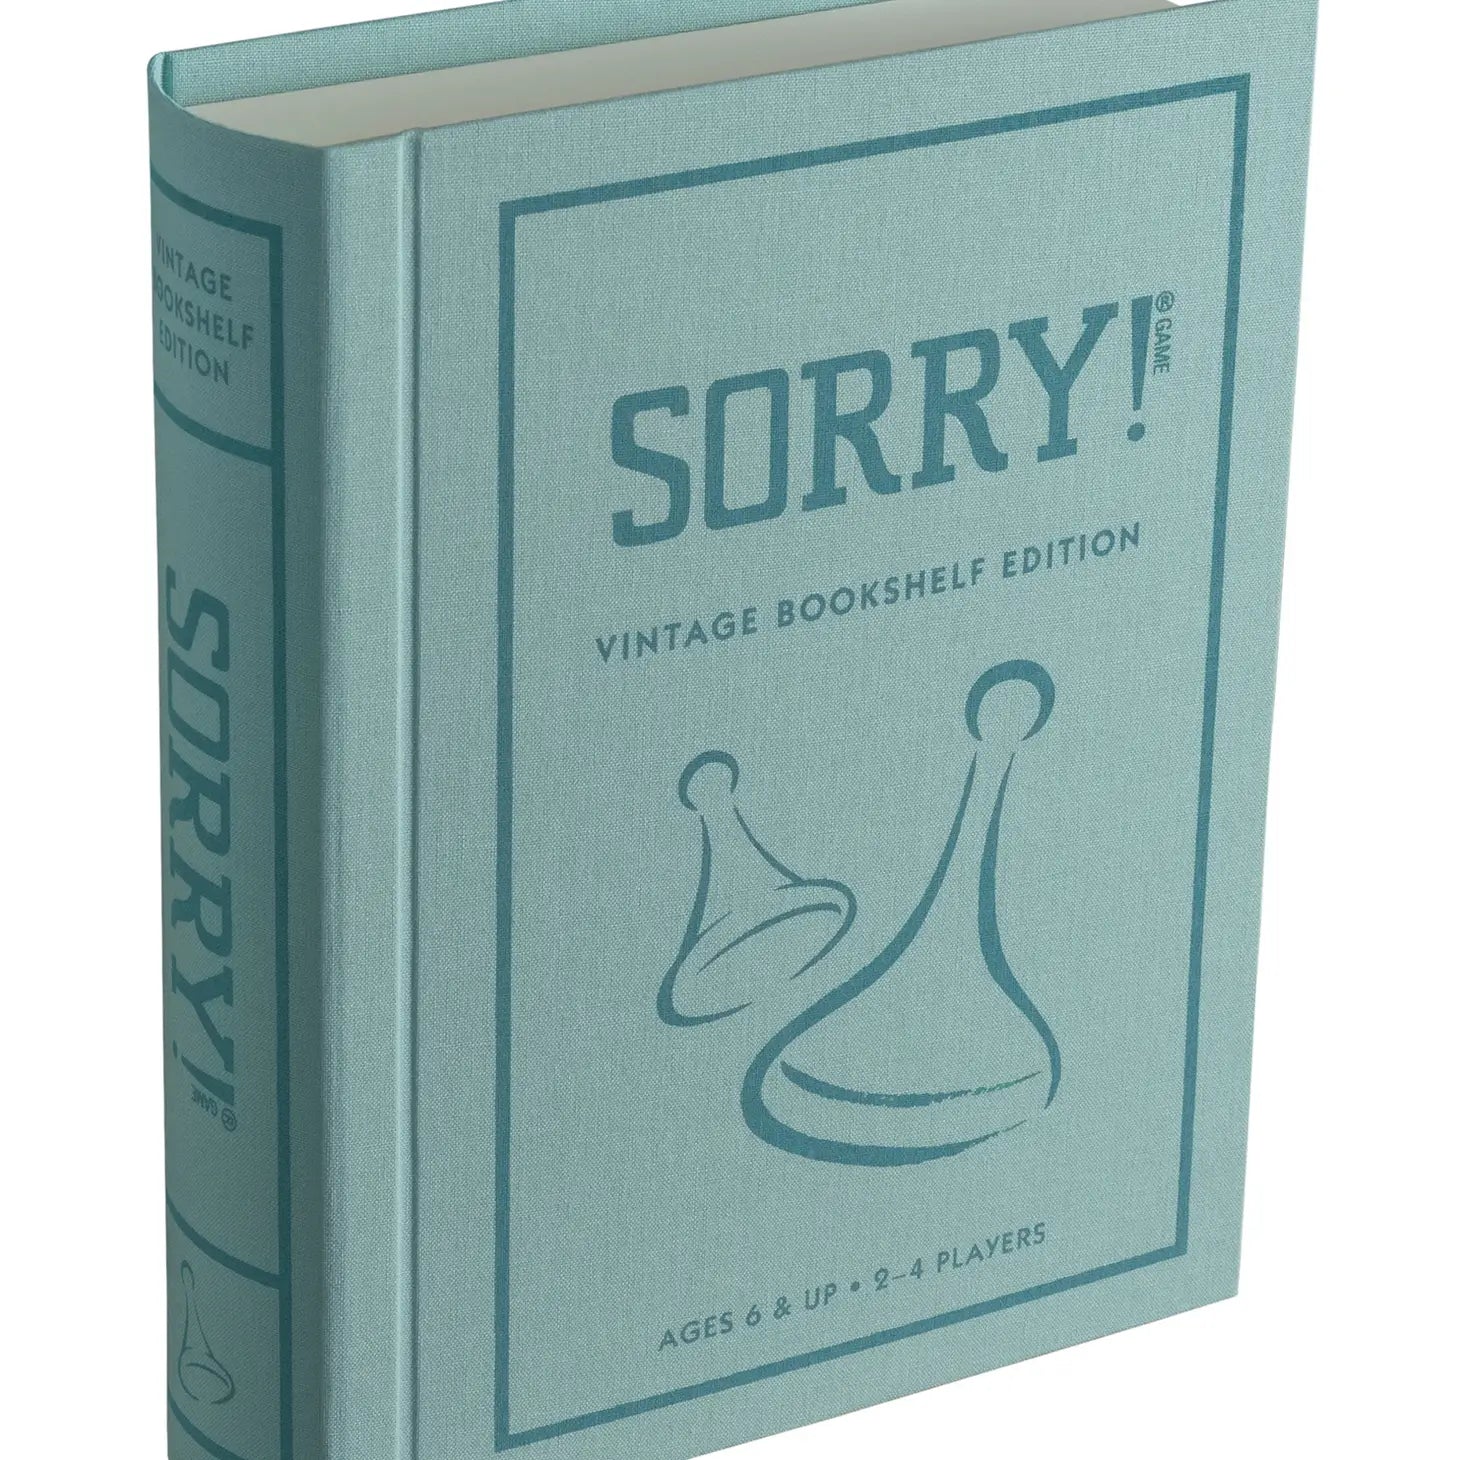 Vintage Bookshelf Game - Sorry